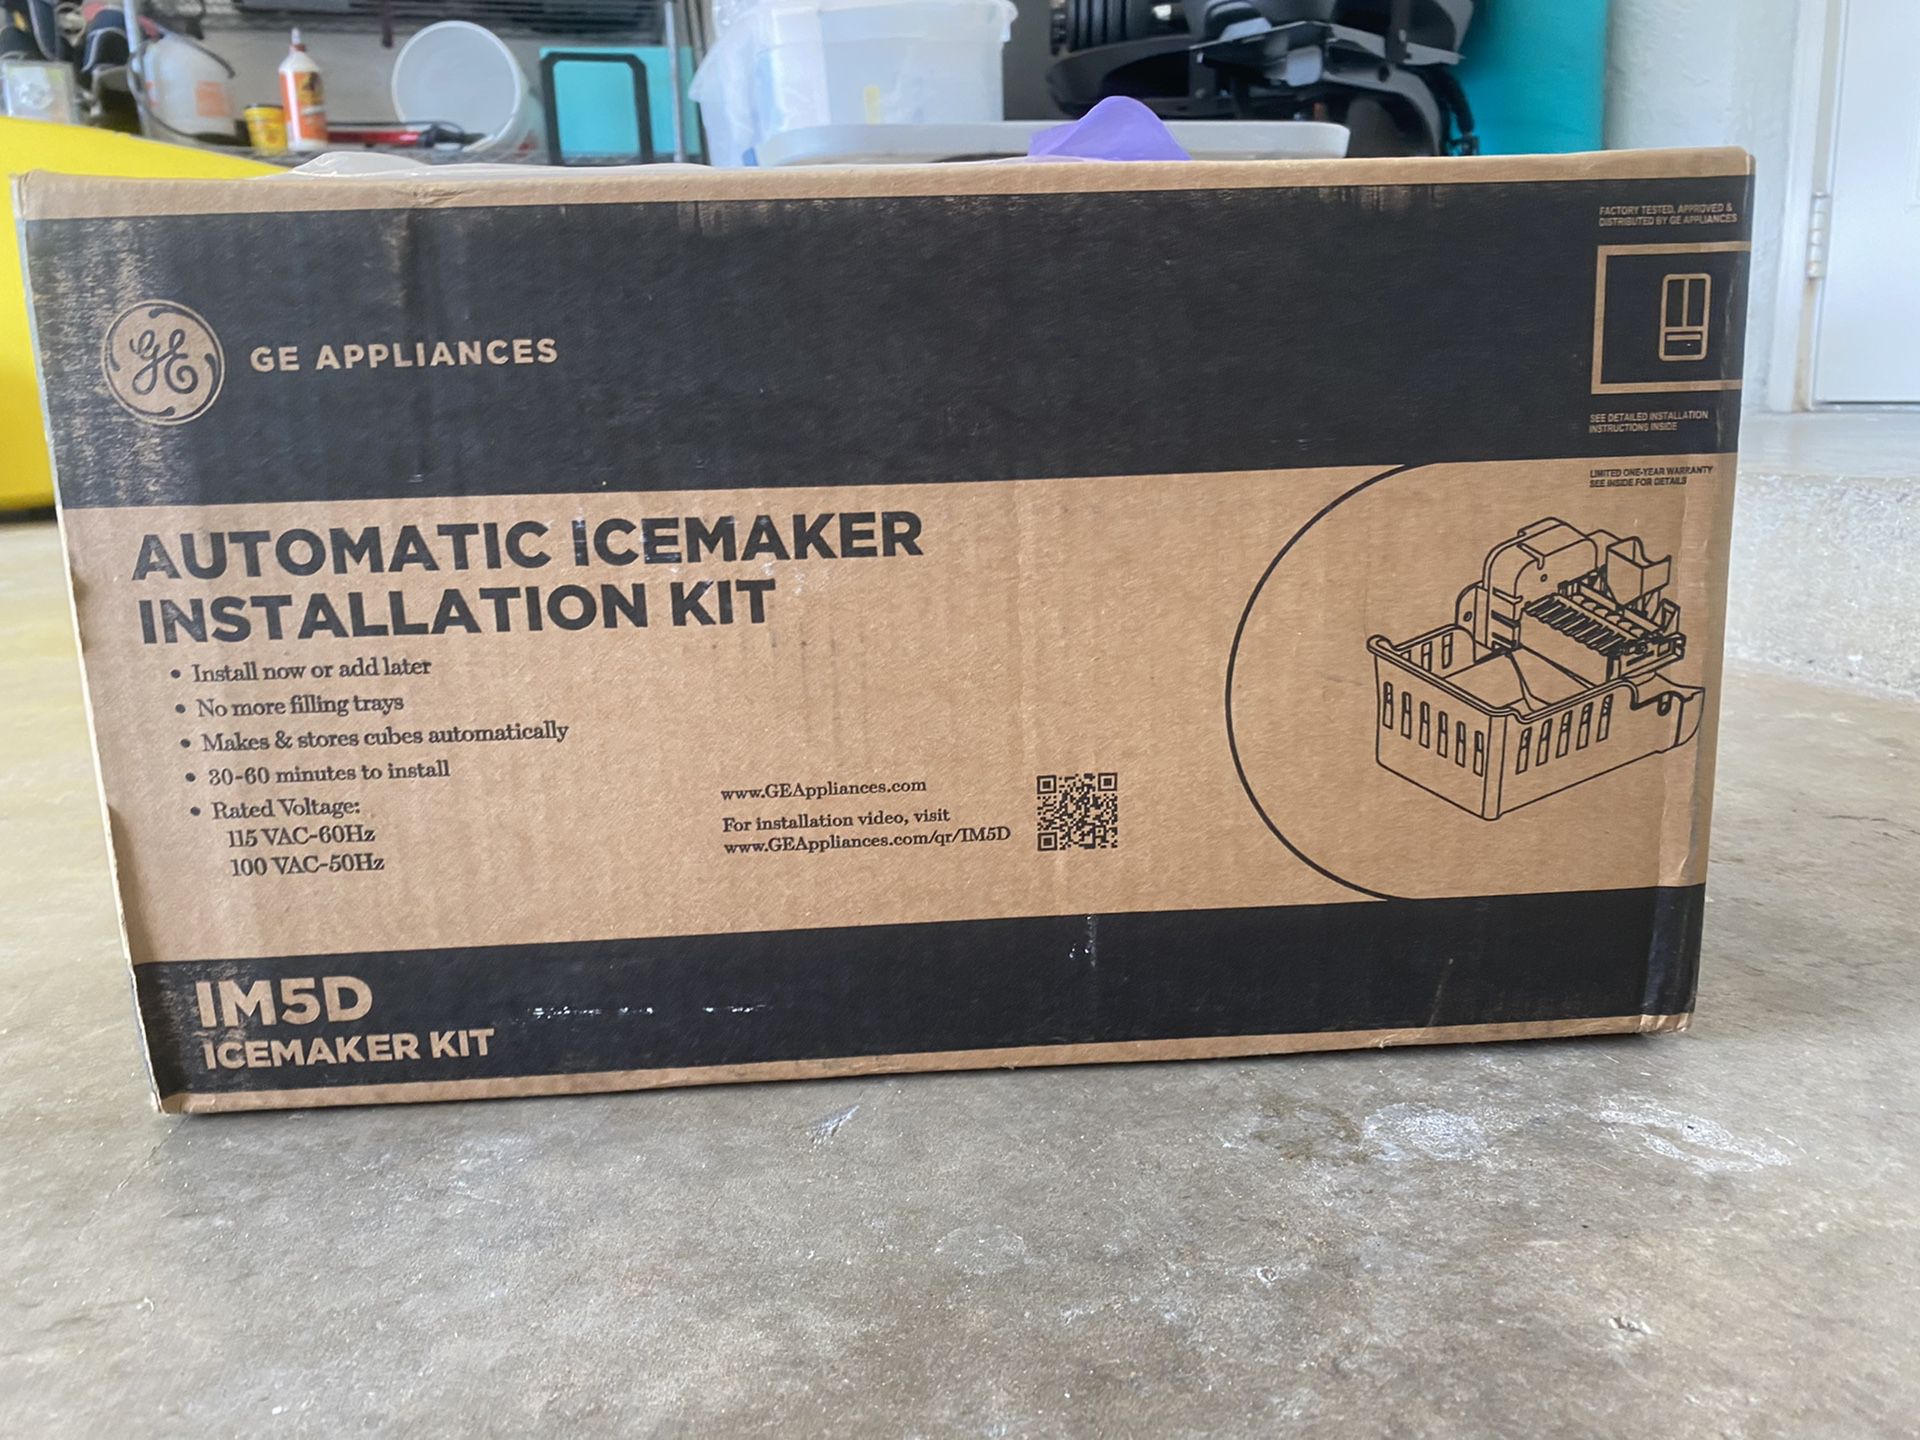 Ice maker installation kit for 2nd ice maker option GE refrigerator